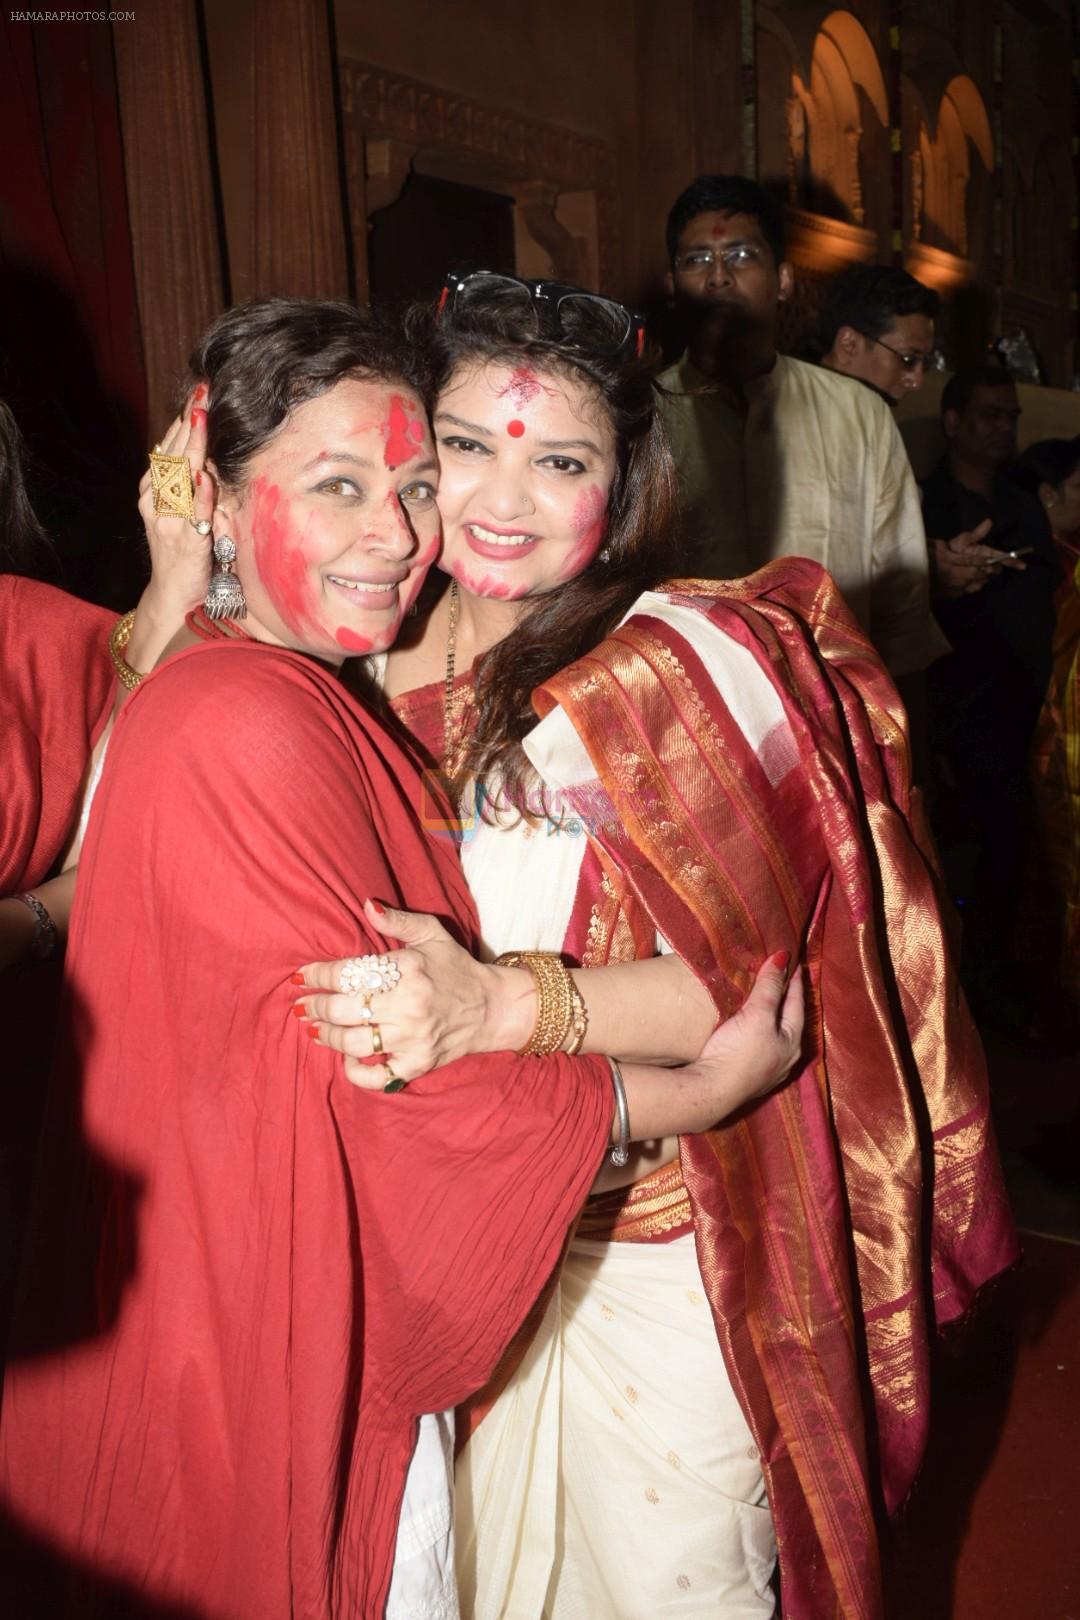 Sharbani Mukherjee at Sindur Khela at North Bombay Sarbojanin Durga Puja in vile Parle on 19th Oct 2018